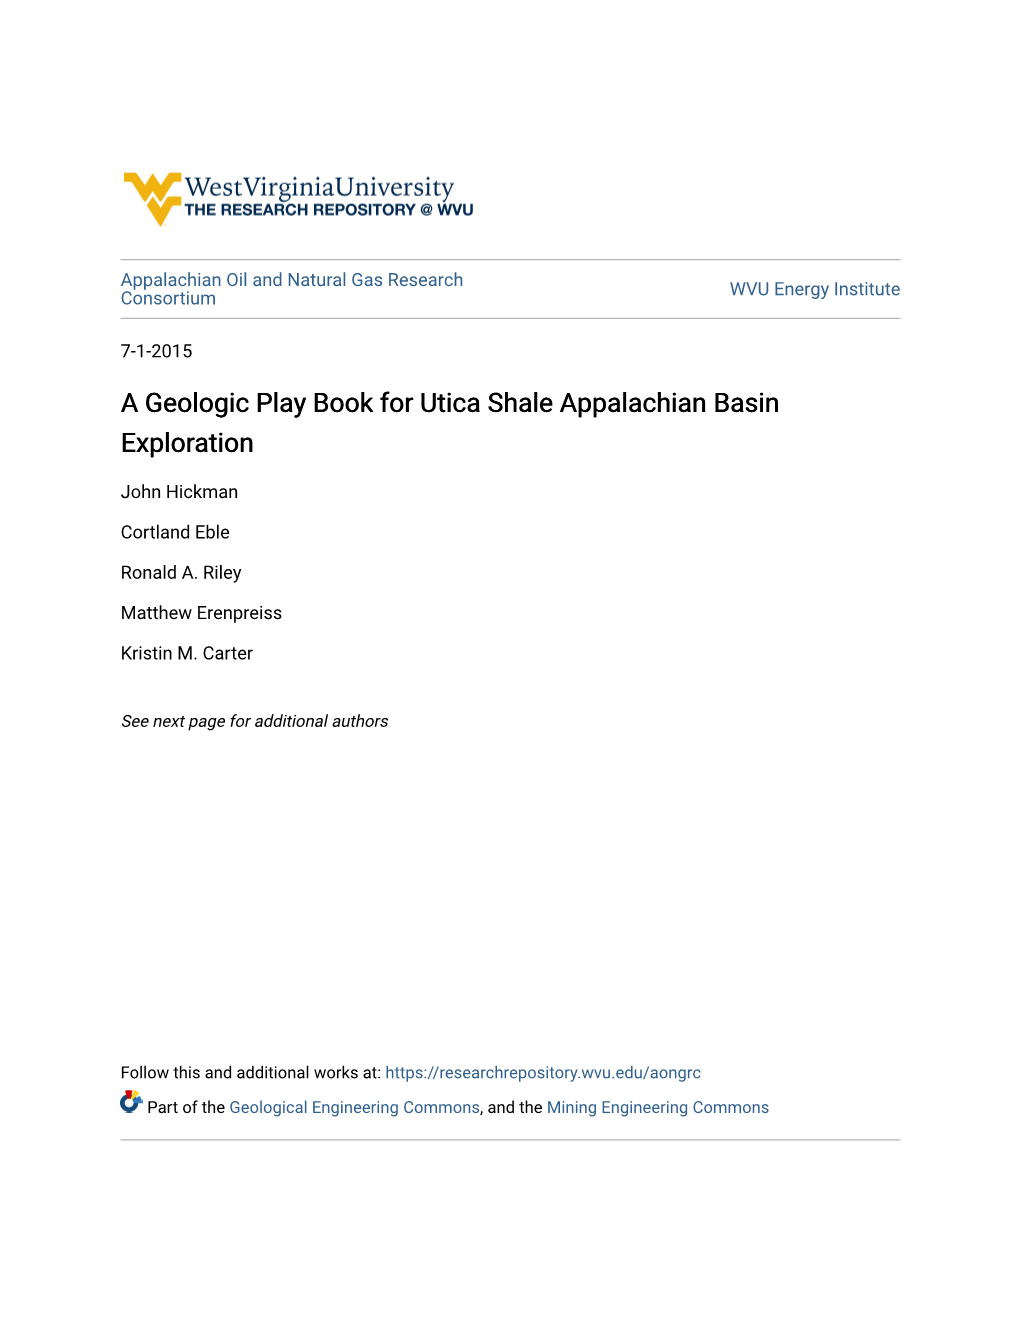 A Geologic Play Book for Utica Shale Appalachian Basin Exploration